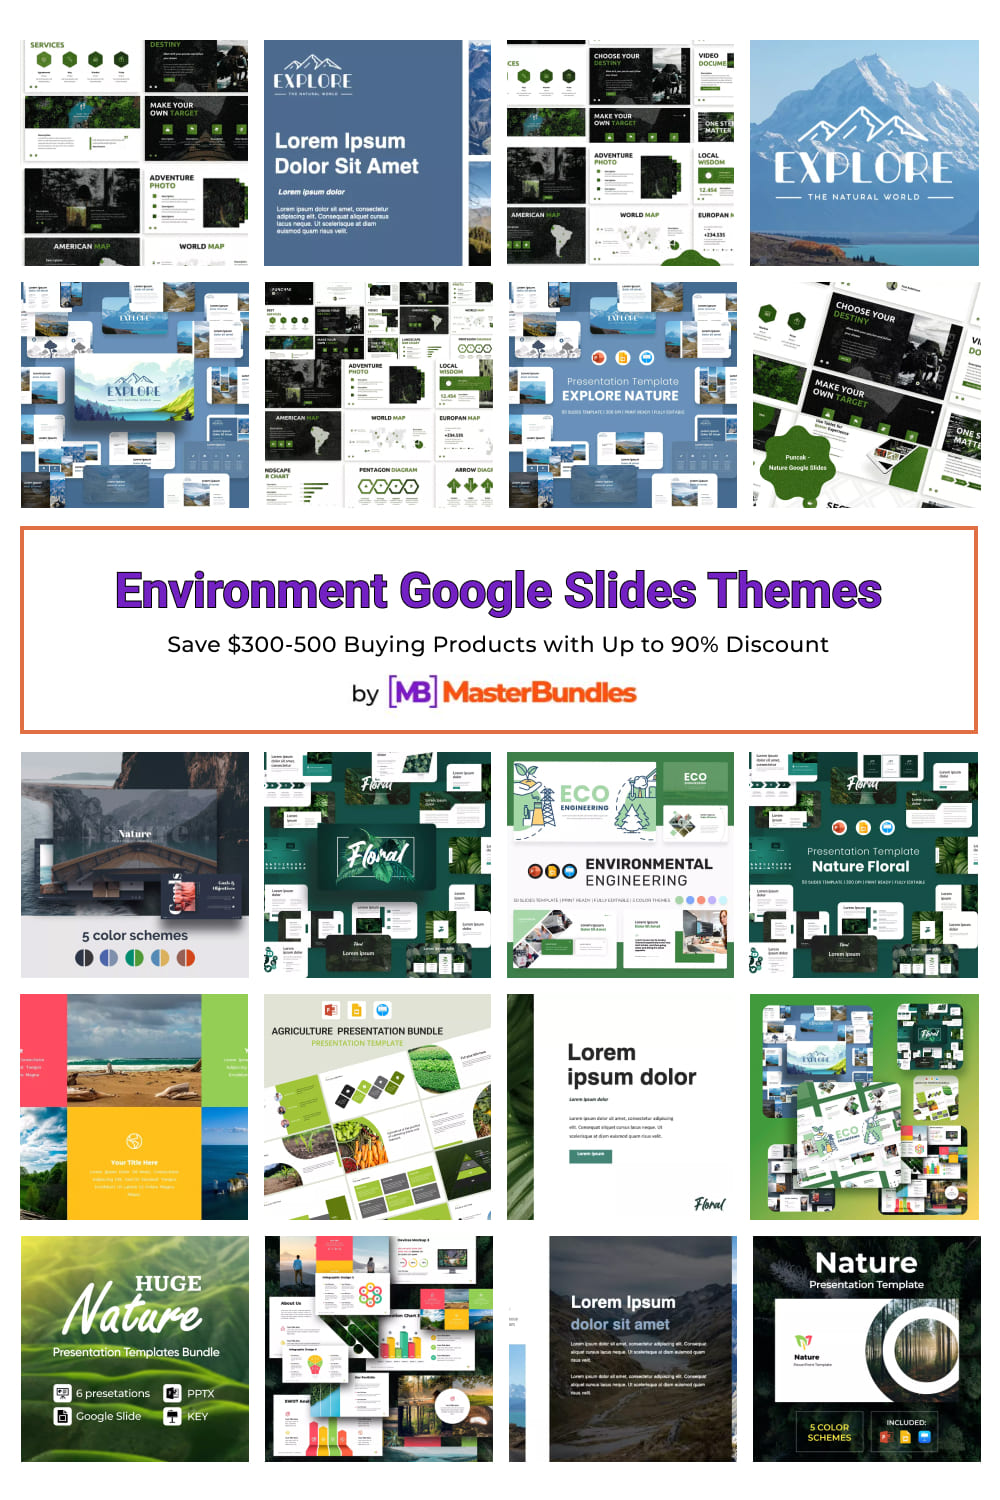 Environment Google Slides Themes Pinterest image.